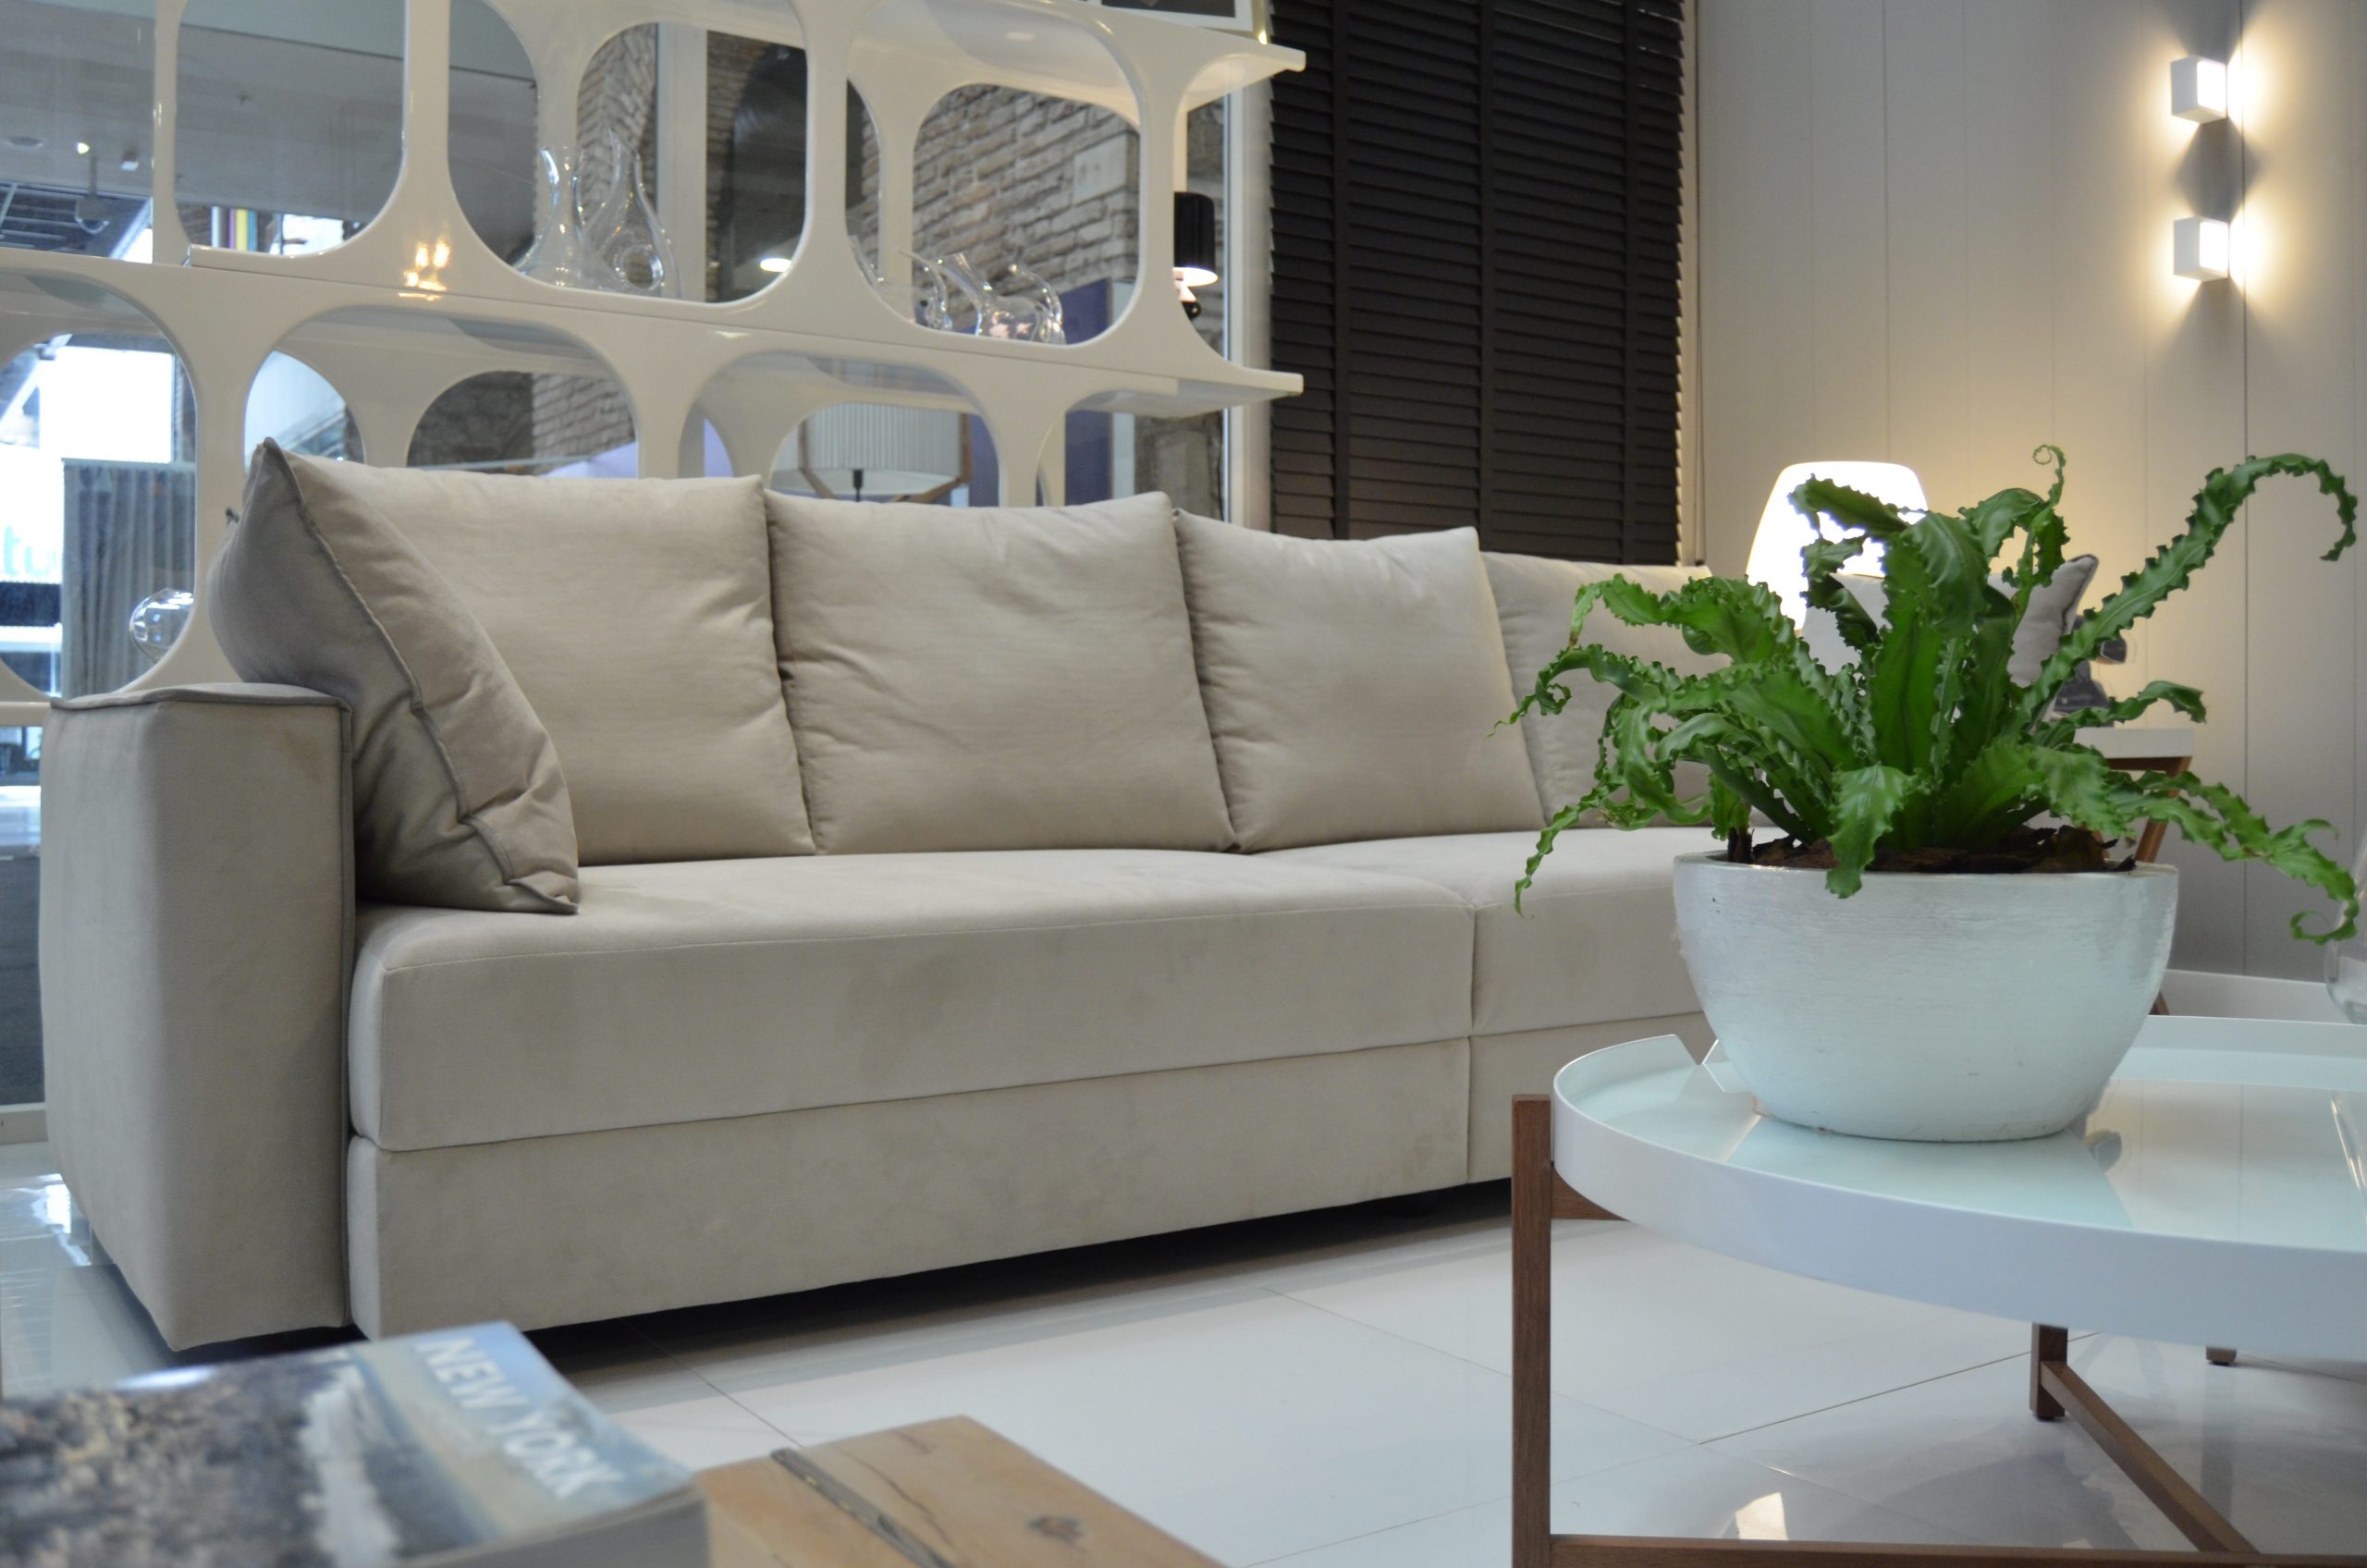 image - How to Choose the Best Ergonomic Sofa